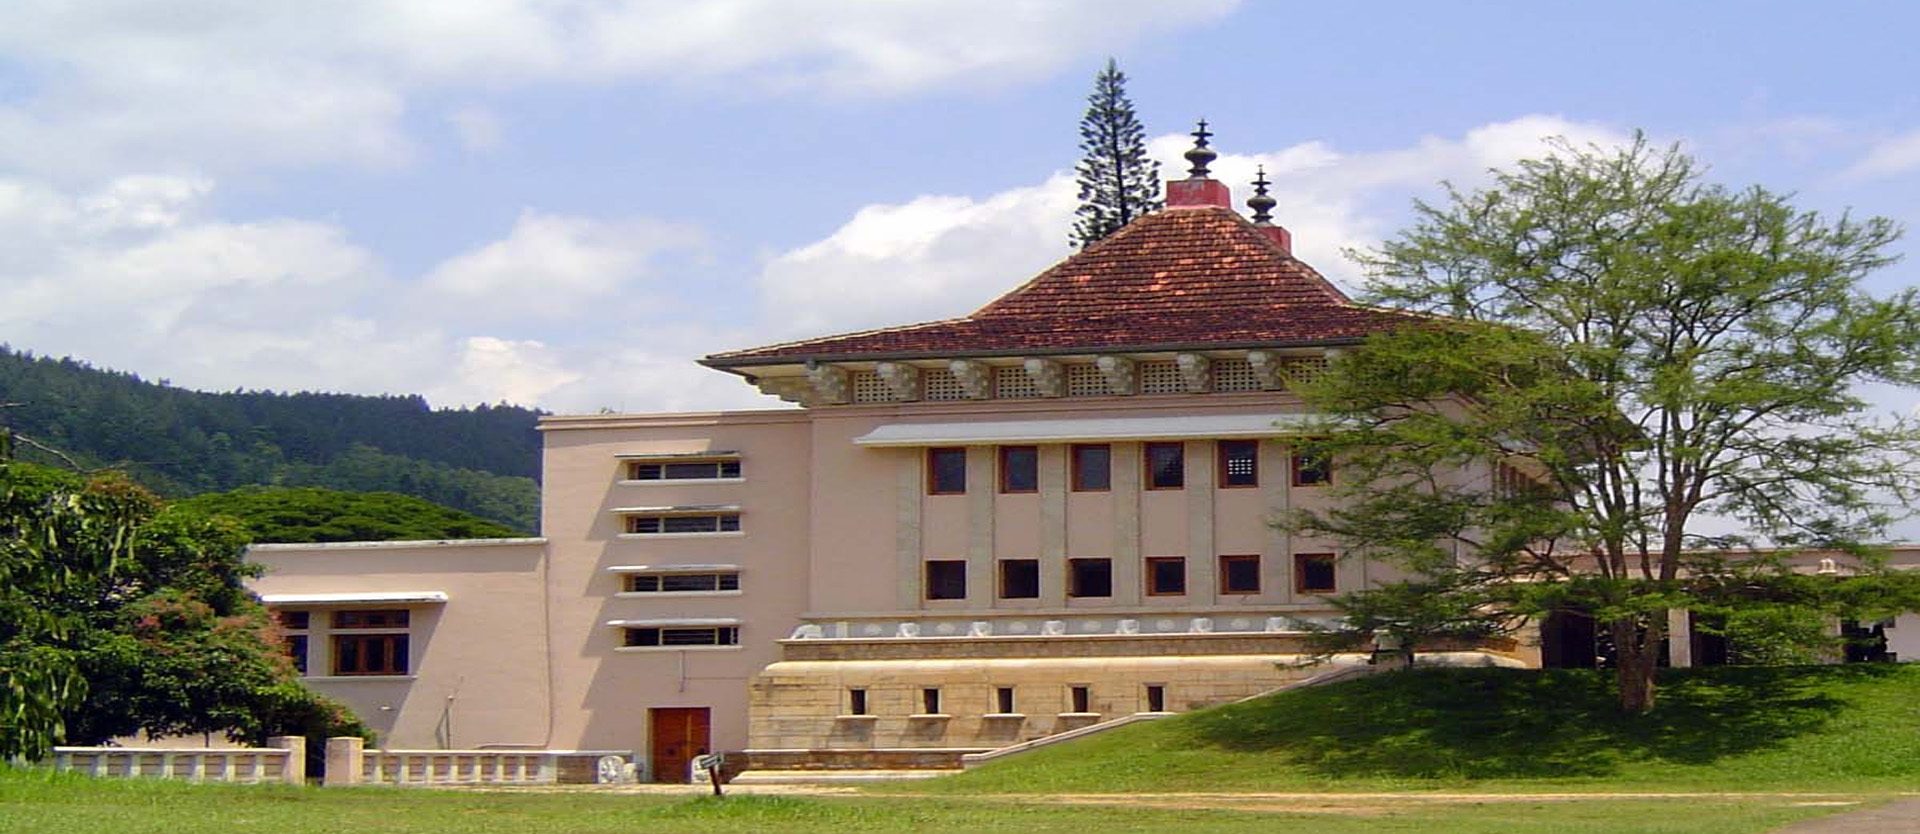 Queen Elizabeth Commonwealth Scholarships For MSc Degree in Sri Lanka, 2019